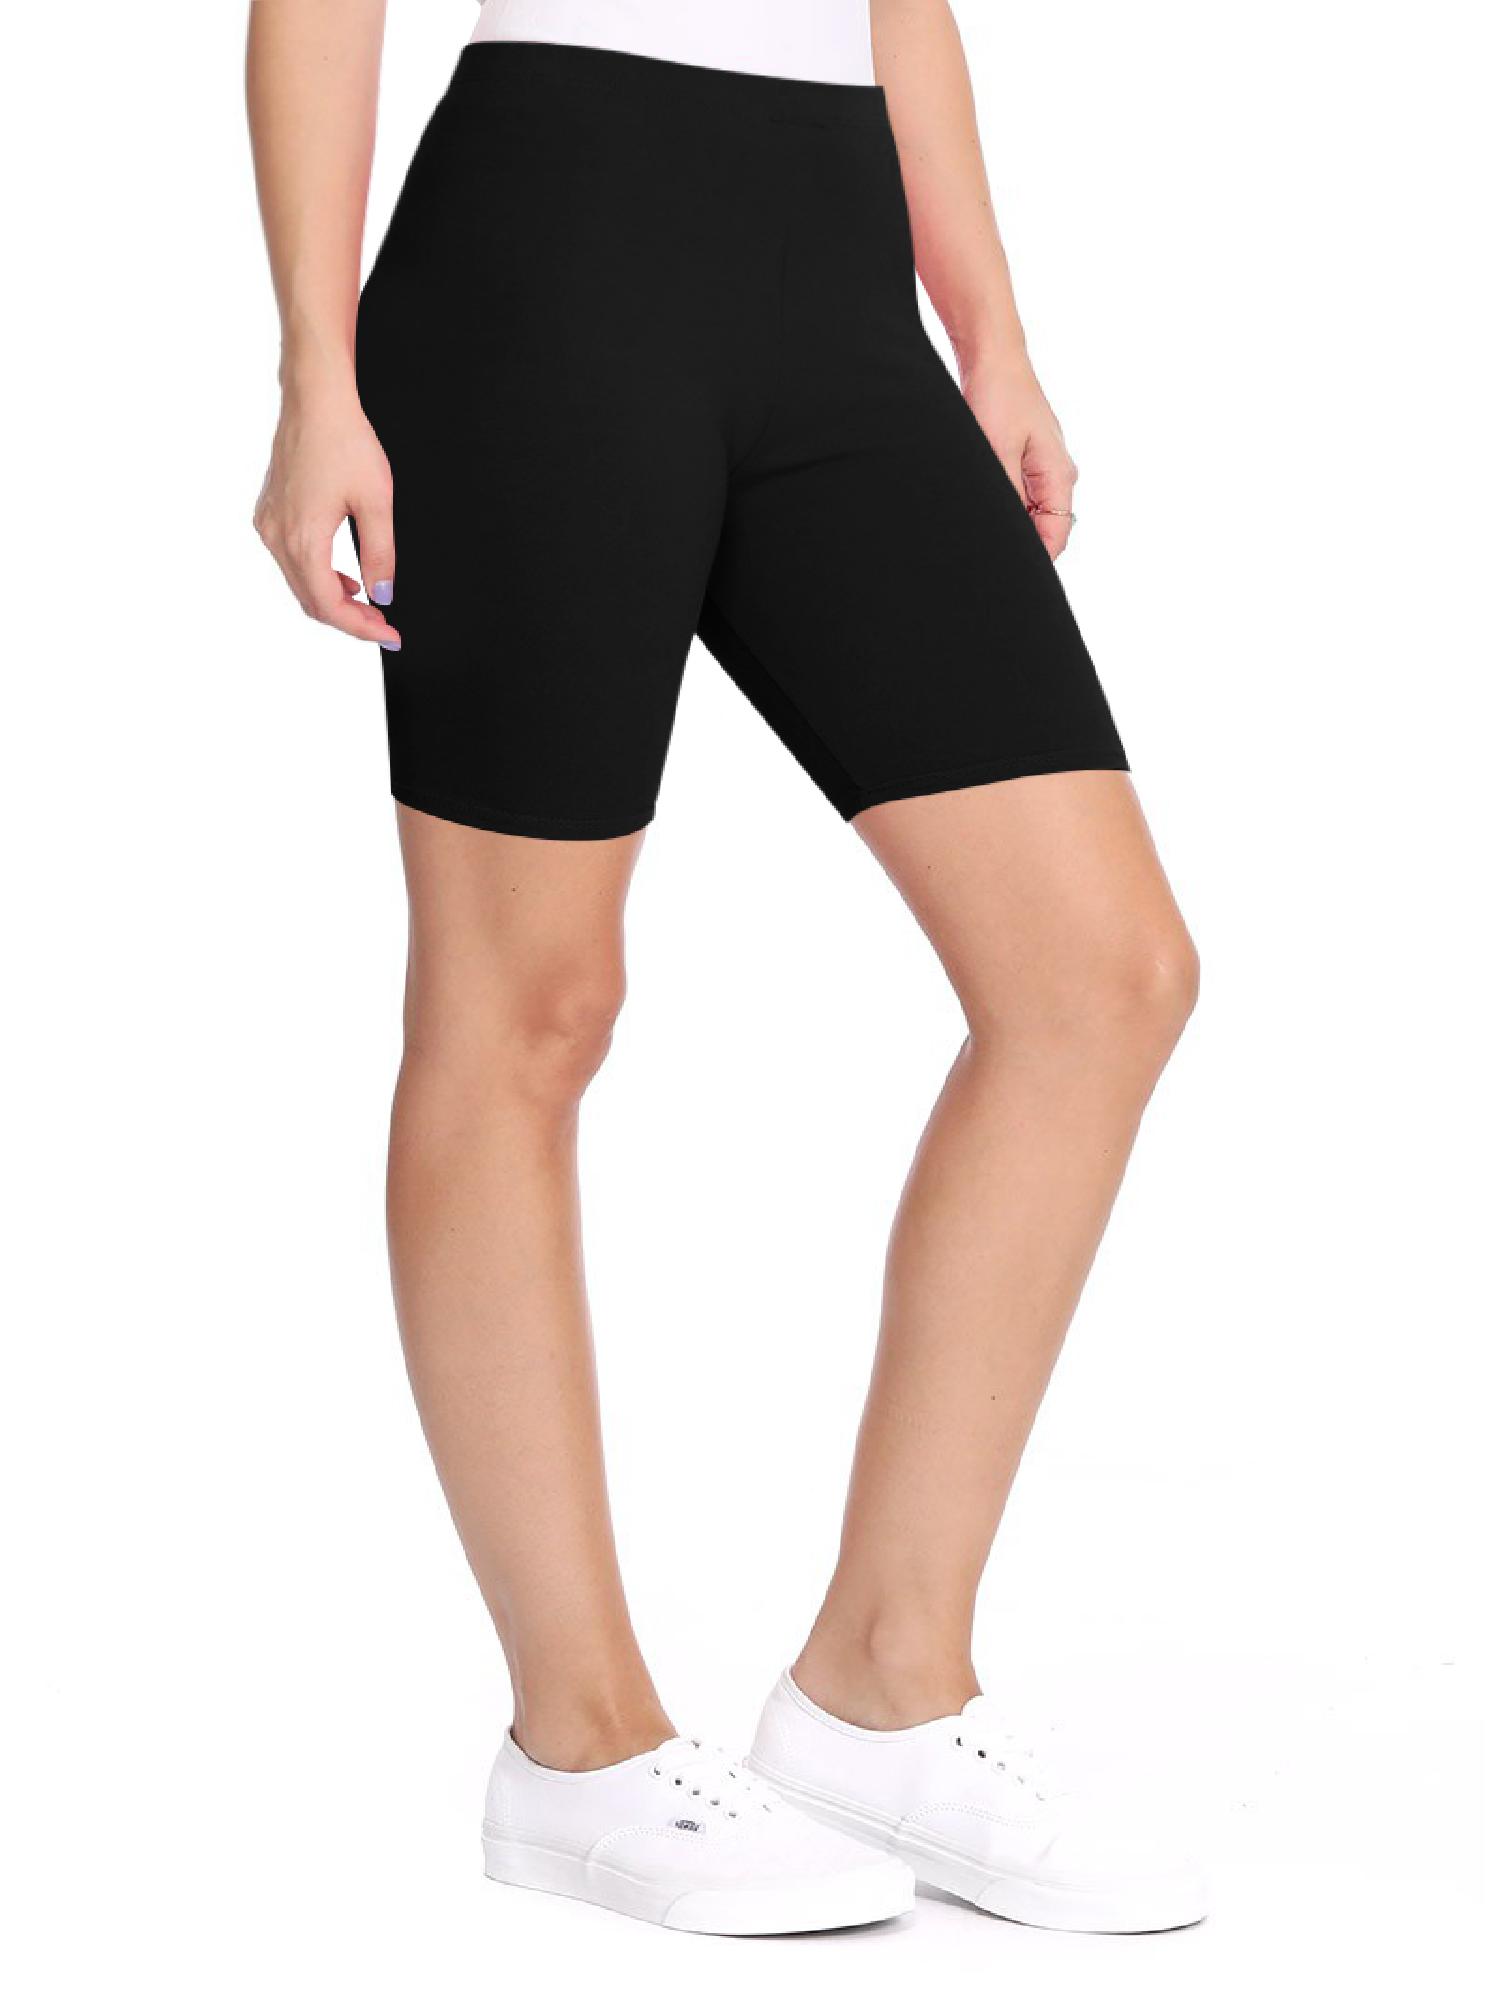 Women's Workout High Waist Comfy Elastic Band Solid Active Yoga Biker Shorts Pants S-3XL - image 2 of 5